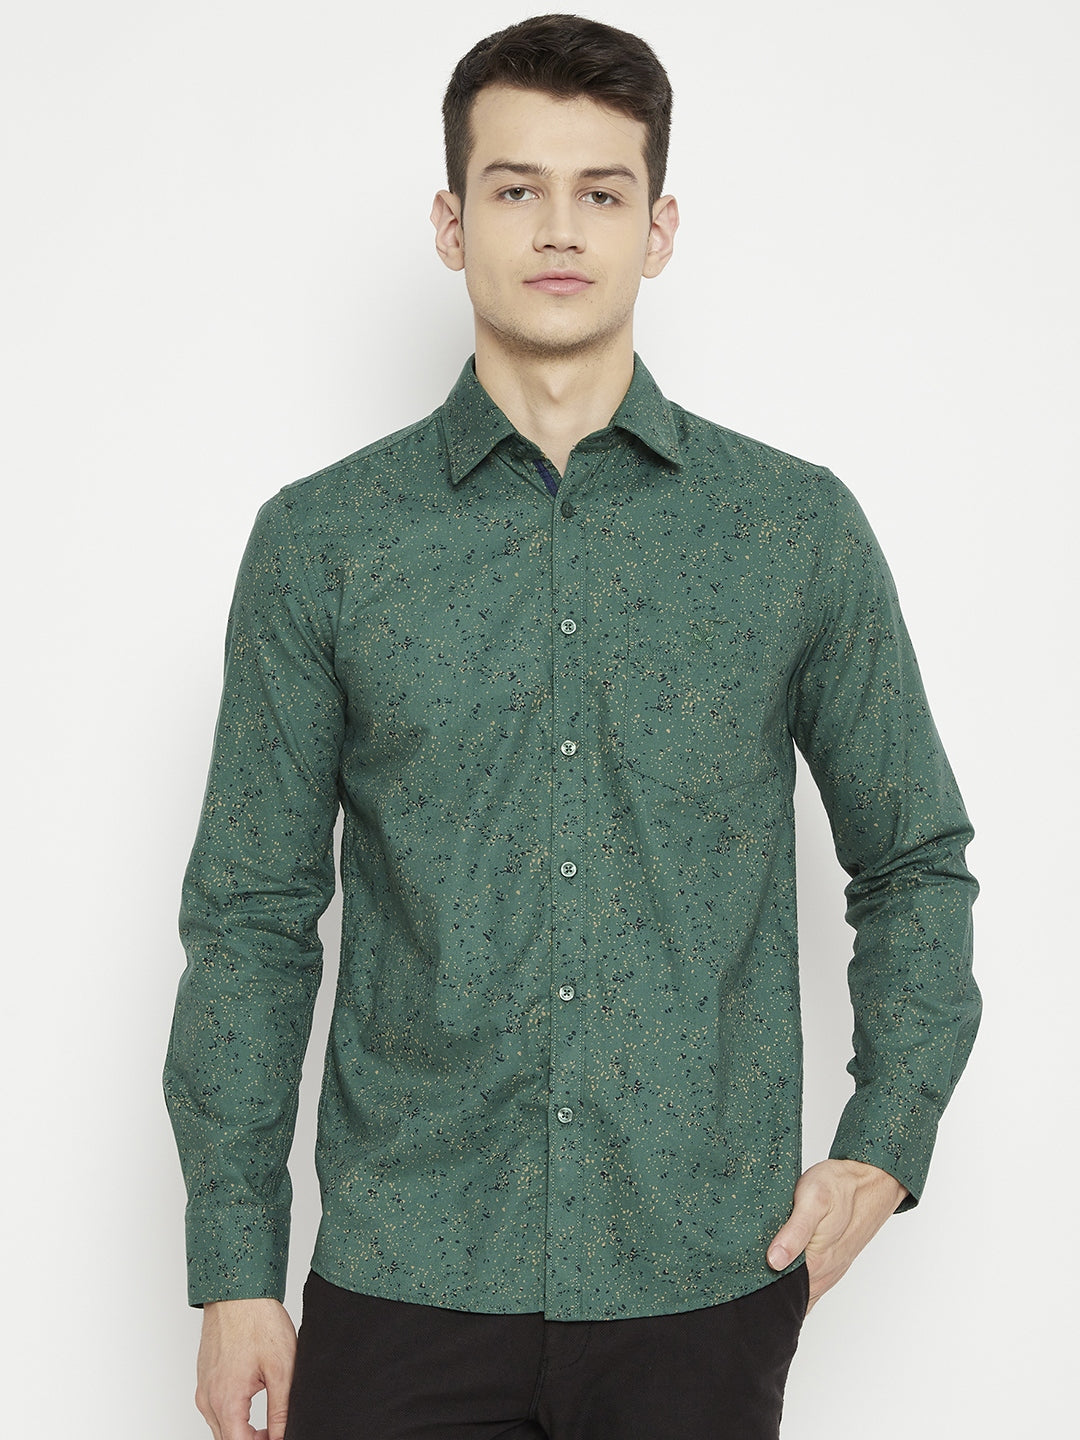 Green Printed Slim Fit shirt - Men Shirts